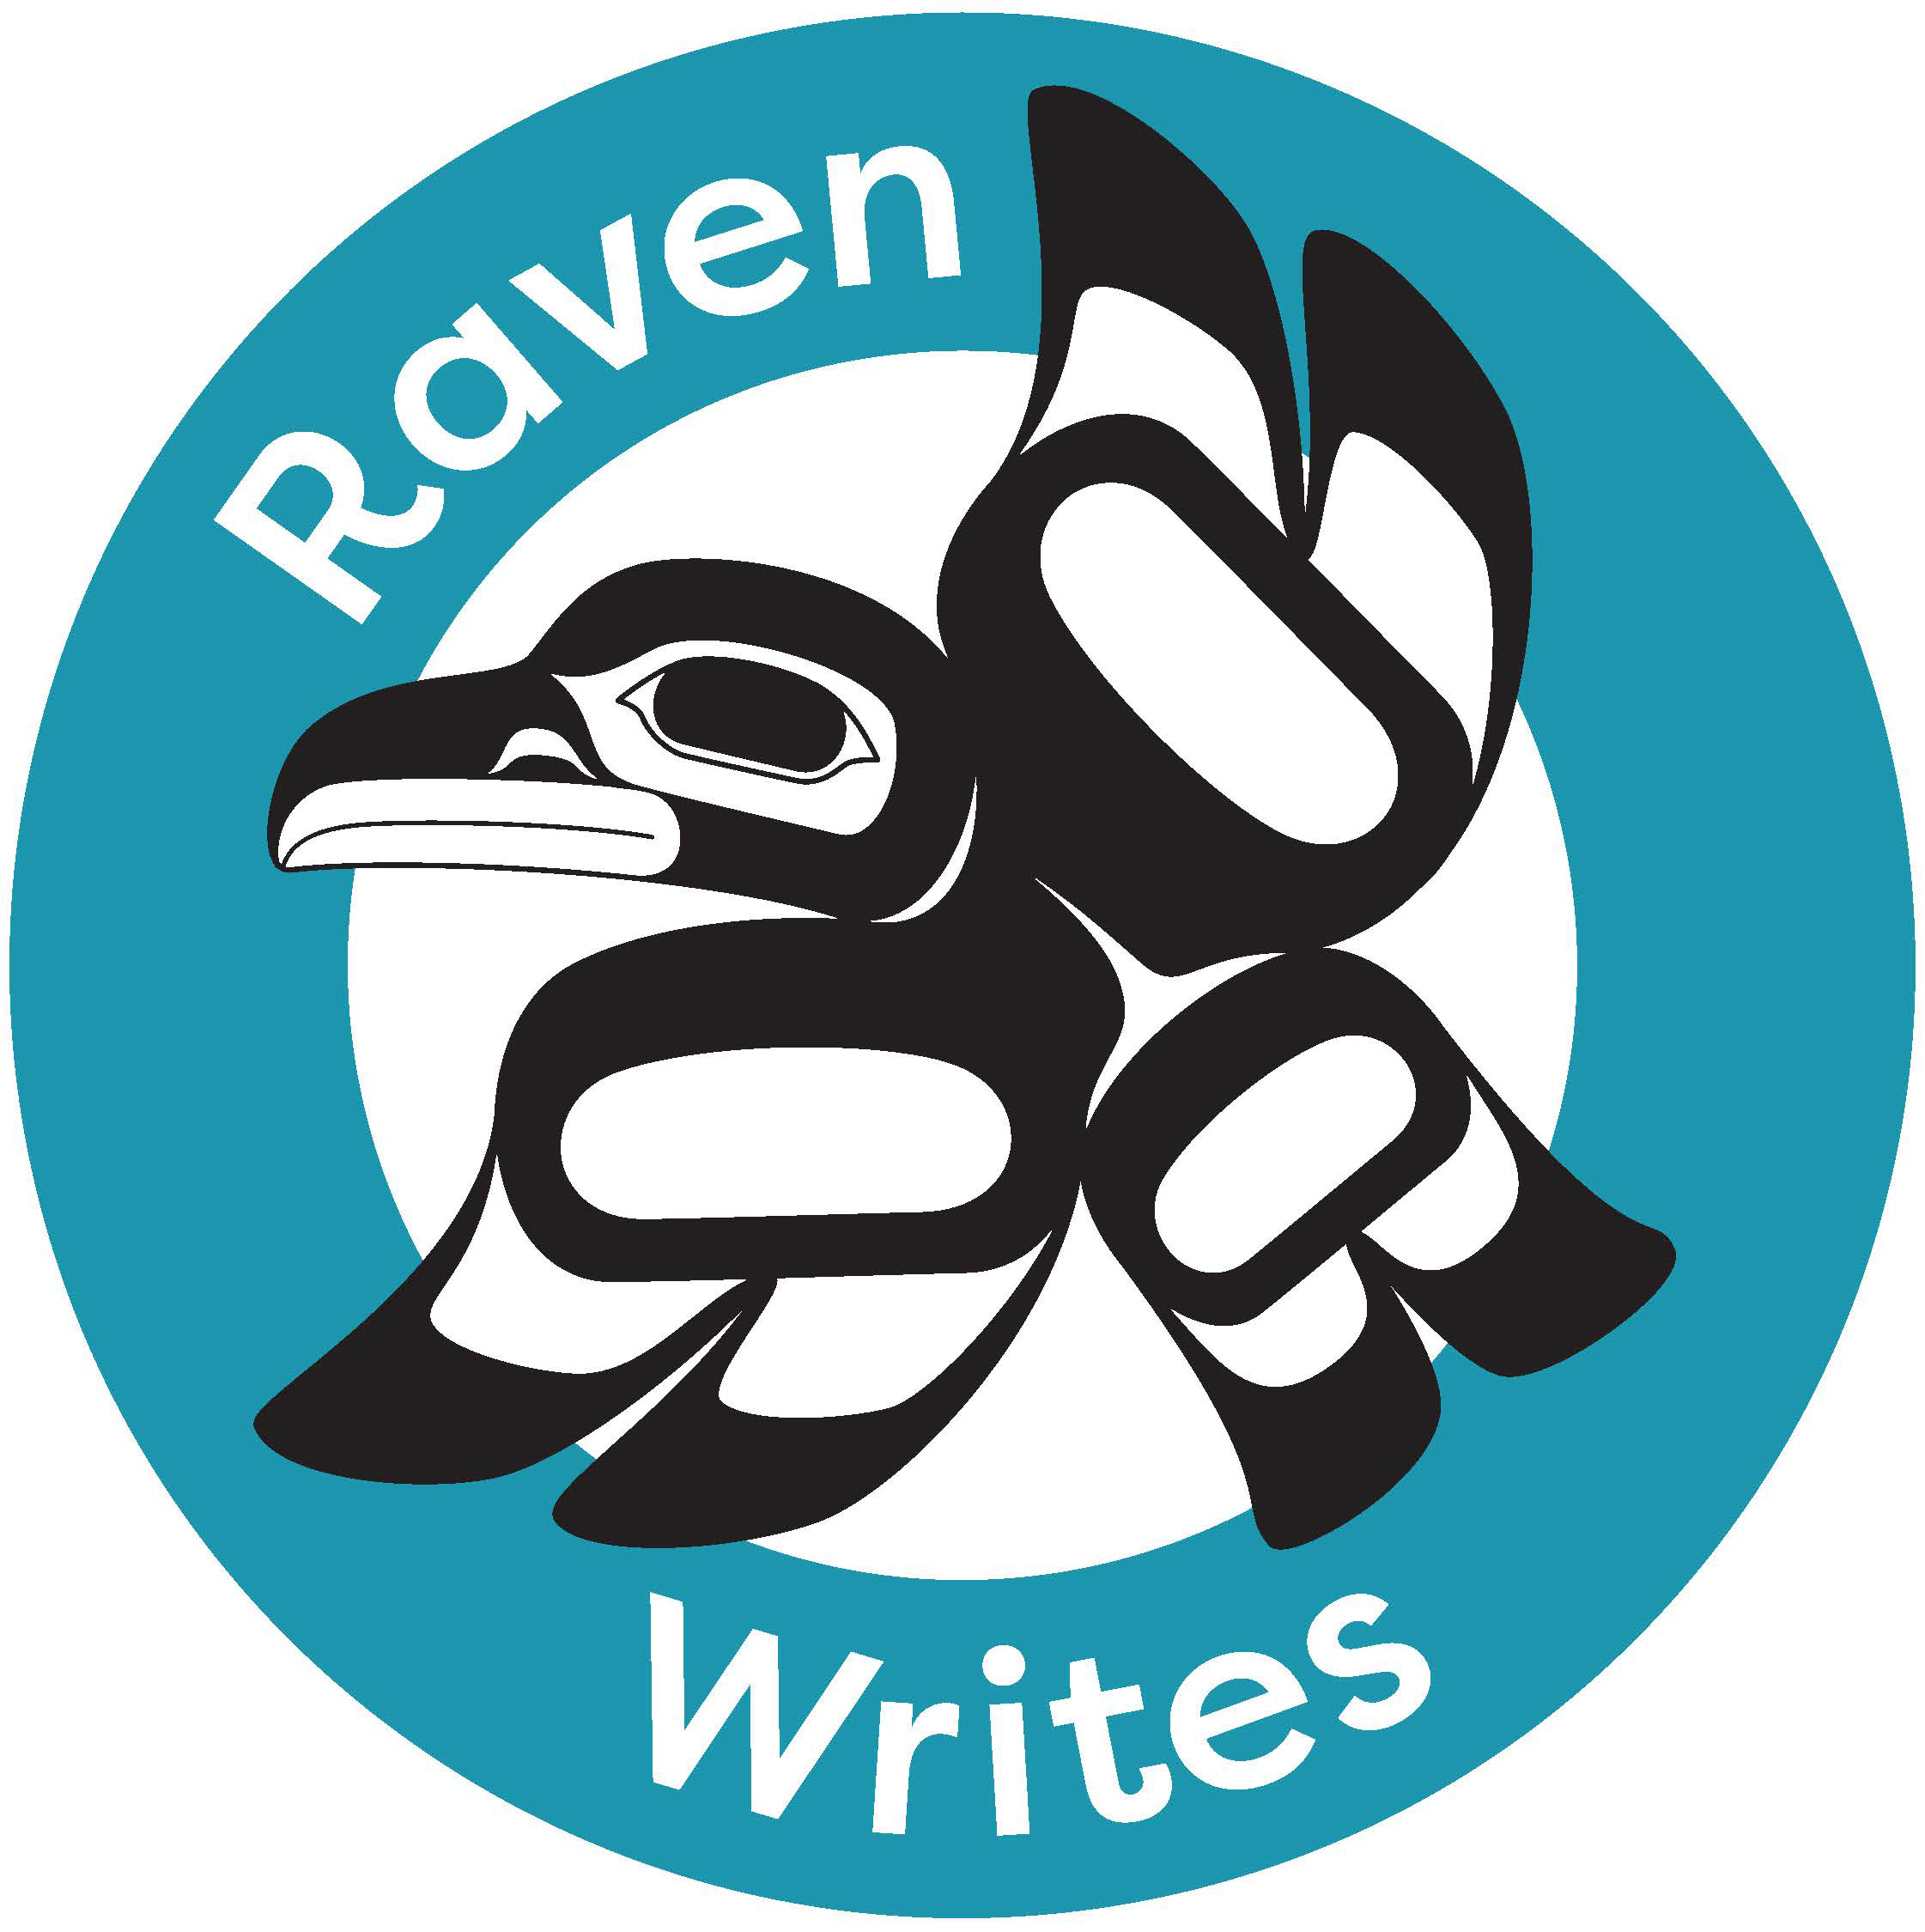 The Raven Writes logo shows an Alaska Native formline design baby raven in flight. 